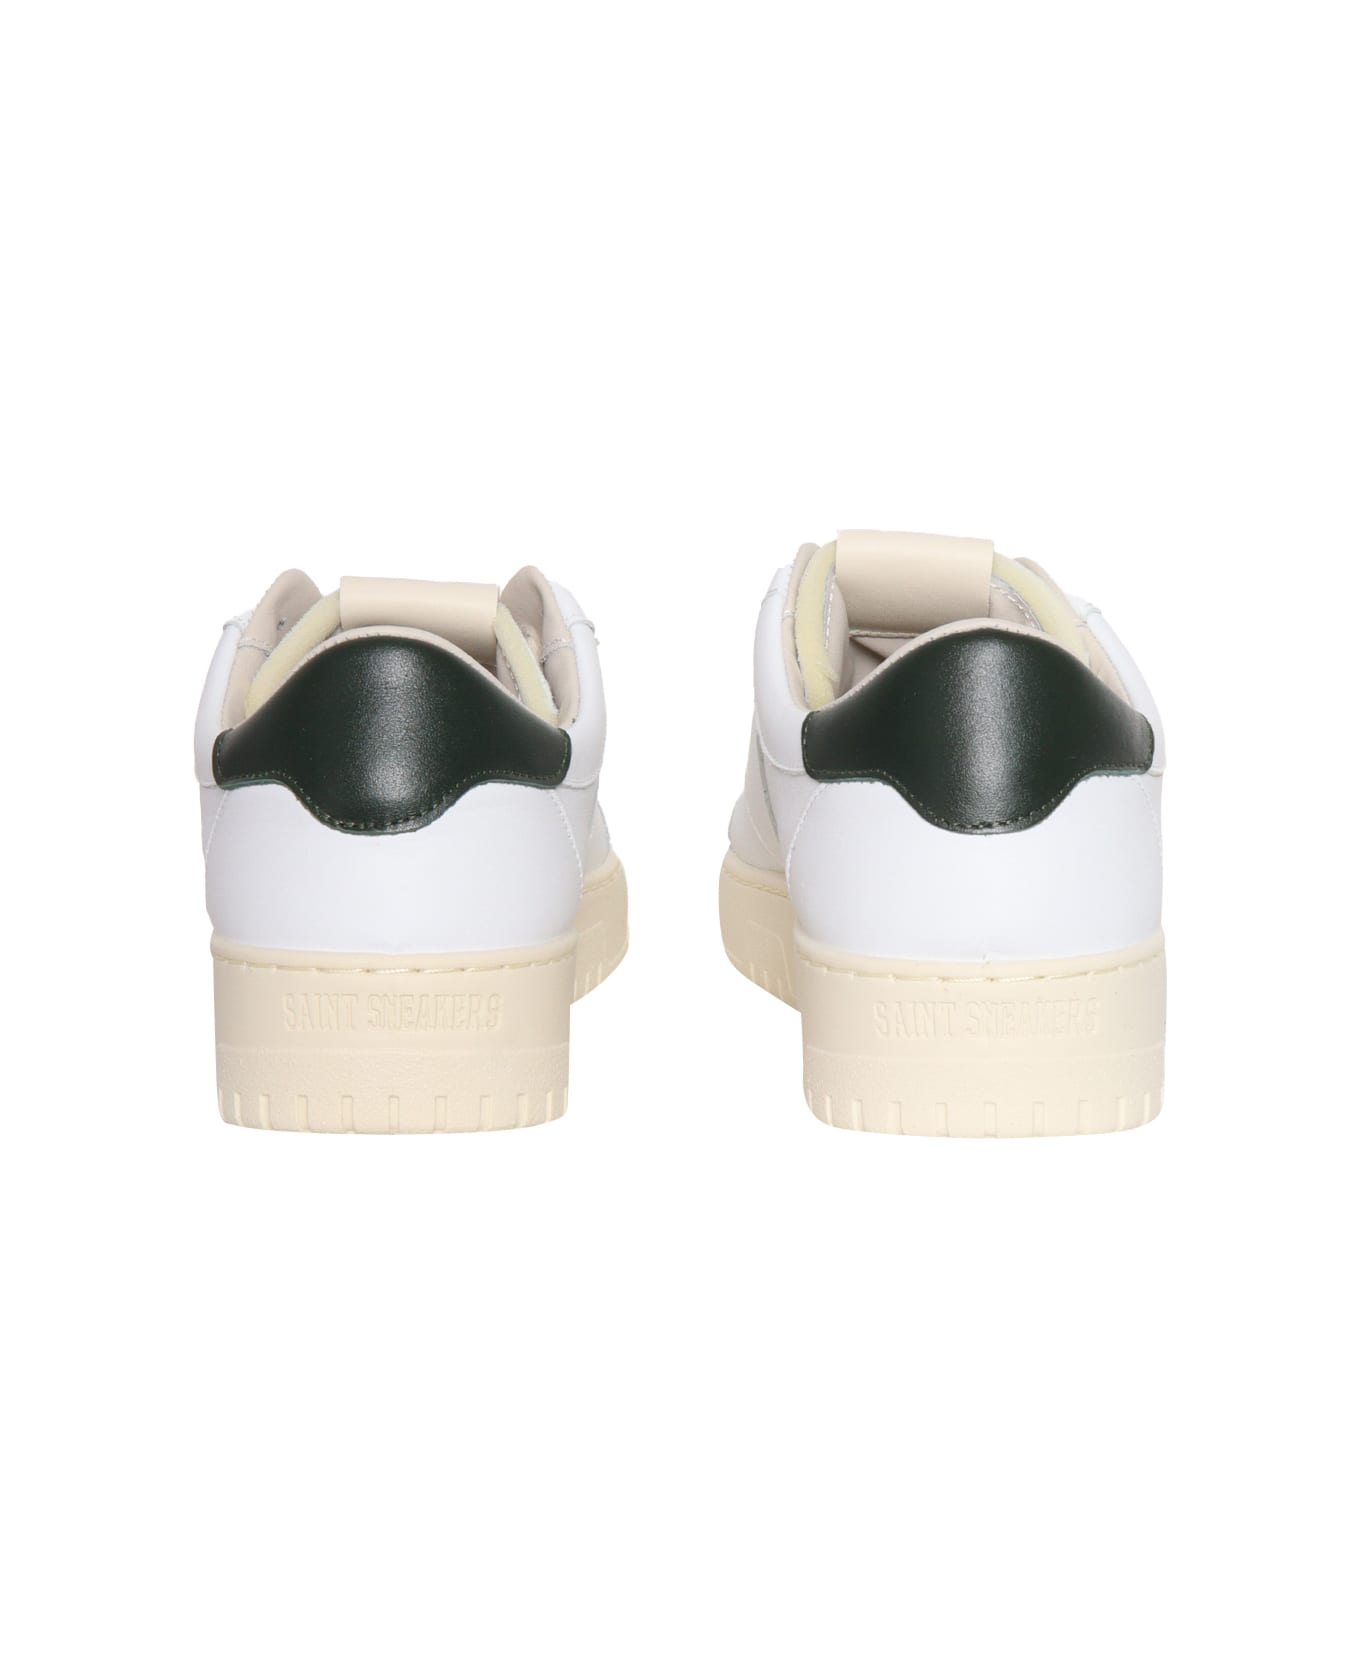 Saint Sneakers White Golf Sneakers - WHITE スニーカー